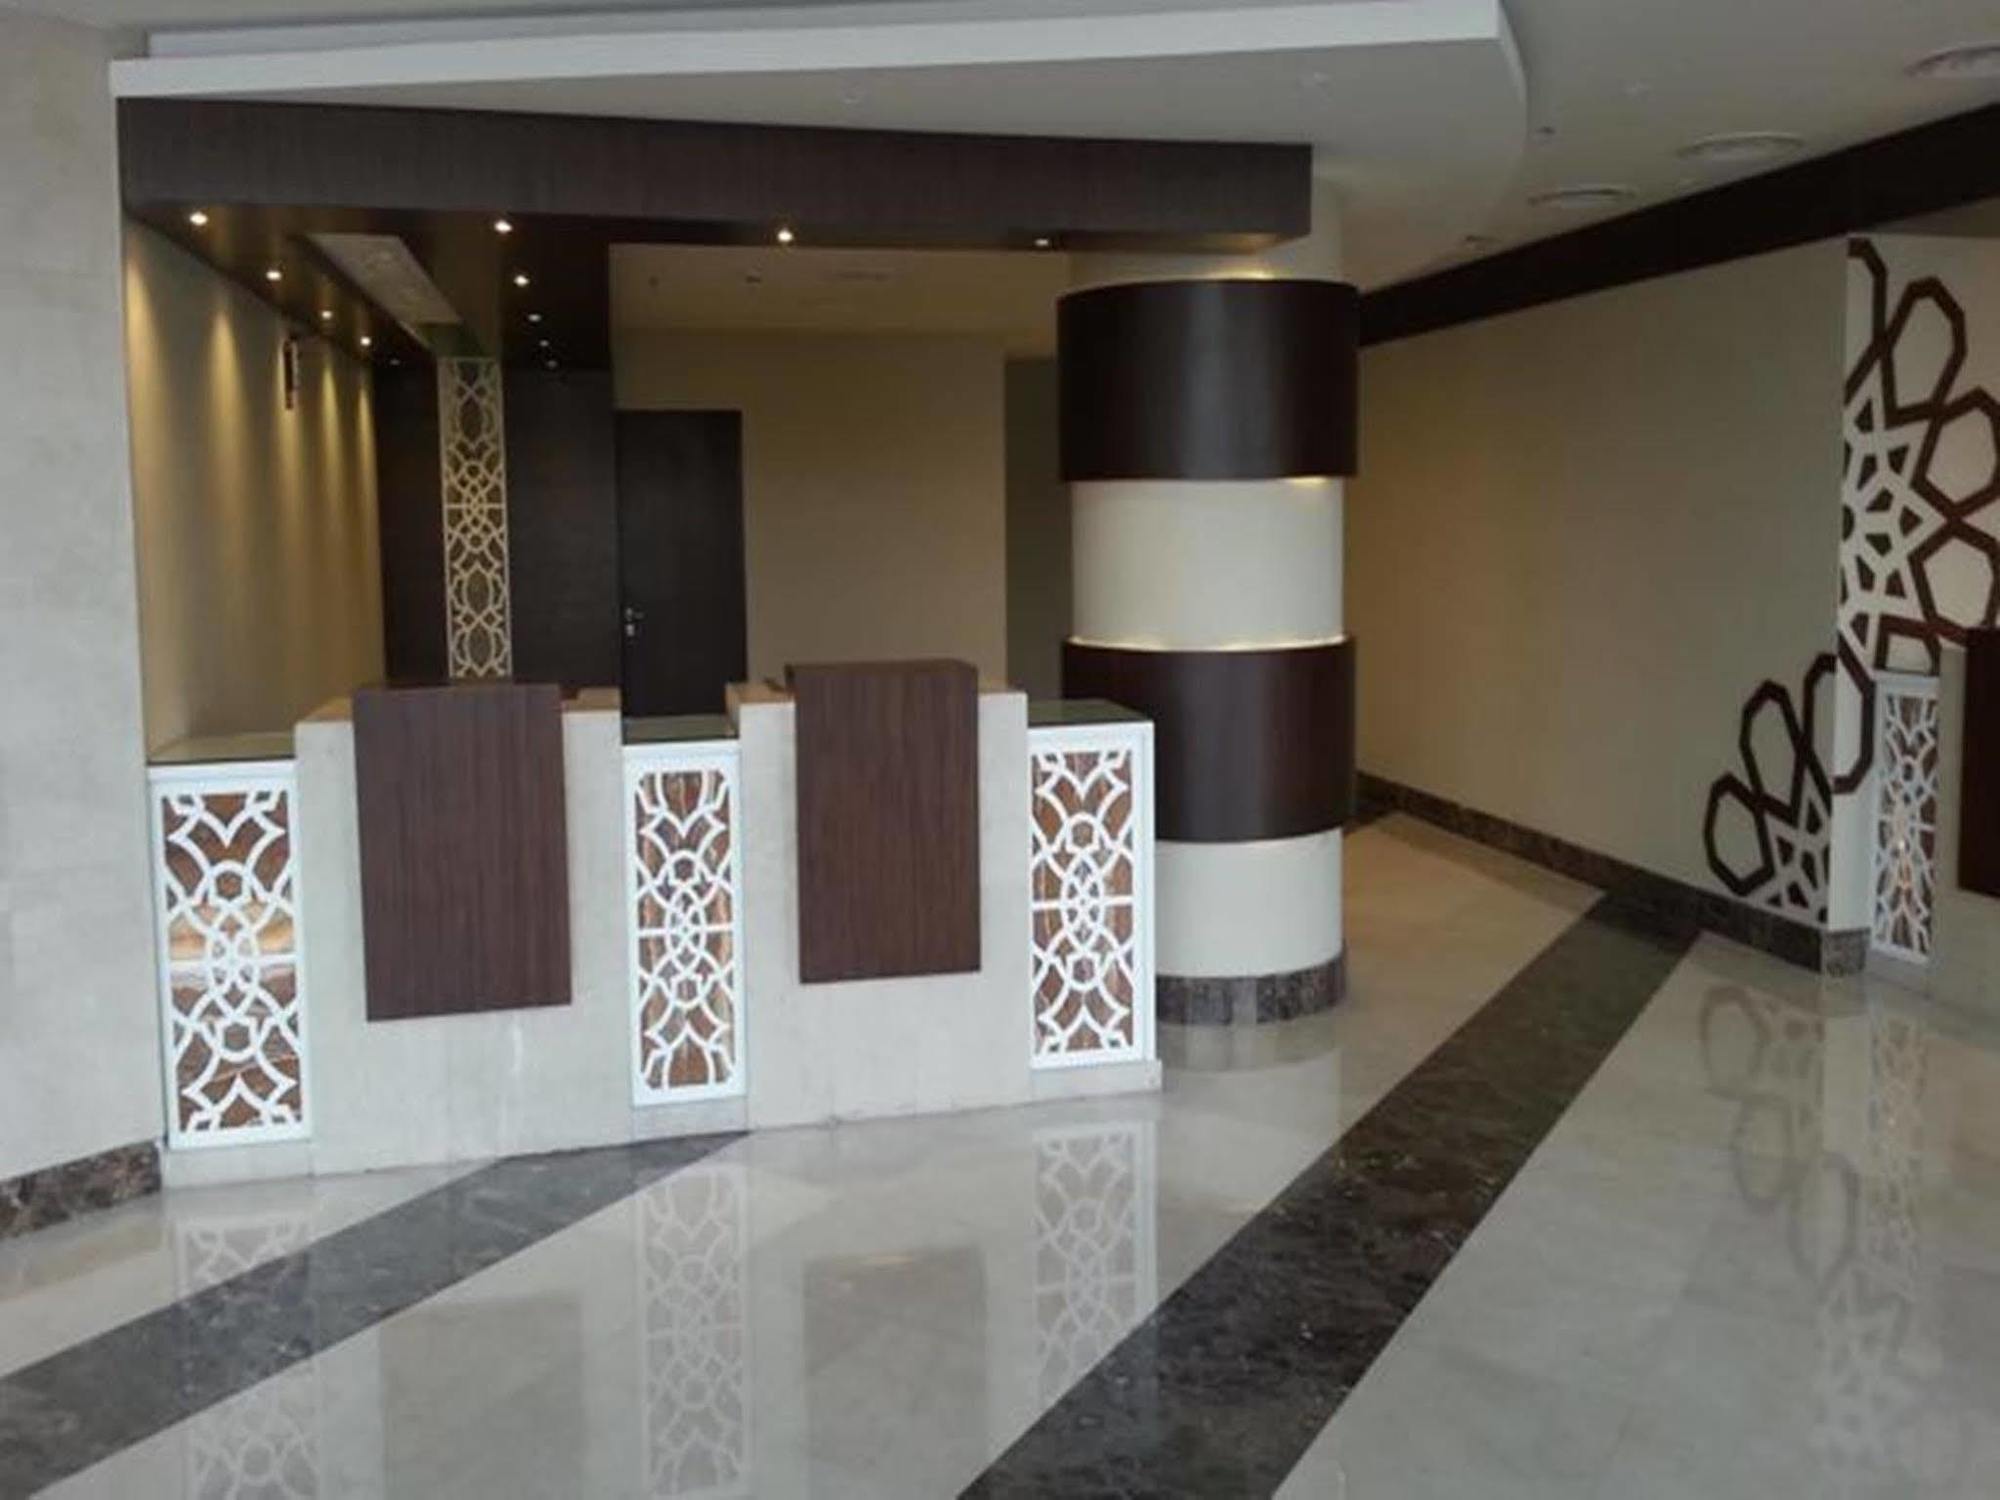 Reefaf Al Mashaer Hotel Mecca 外观 照片